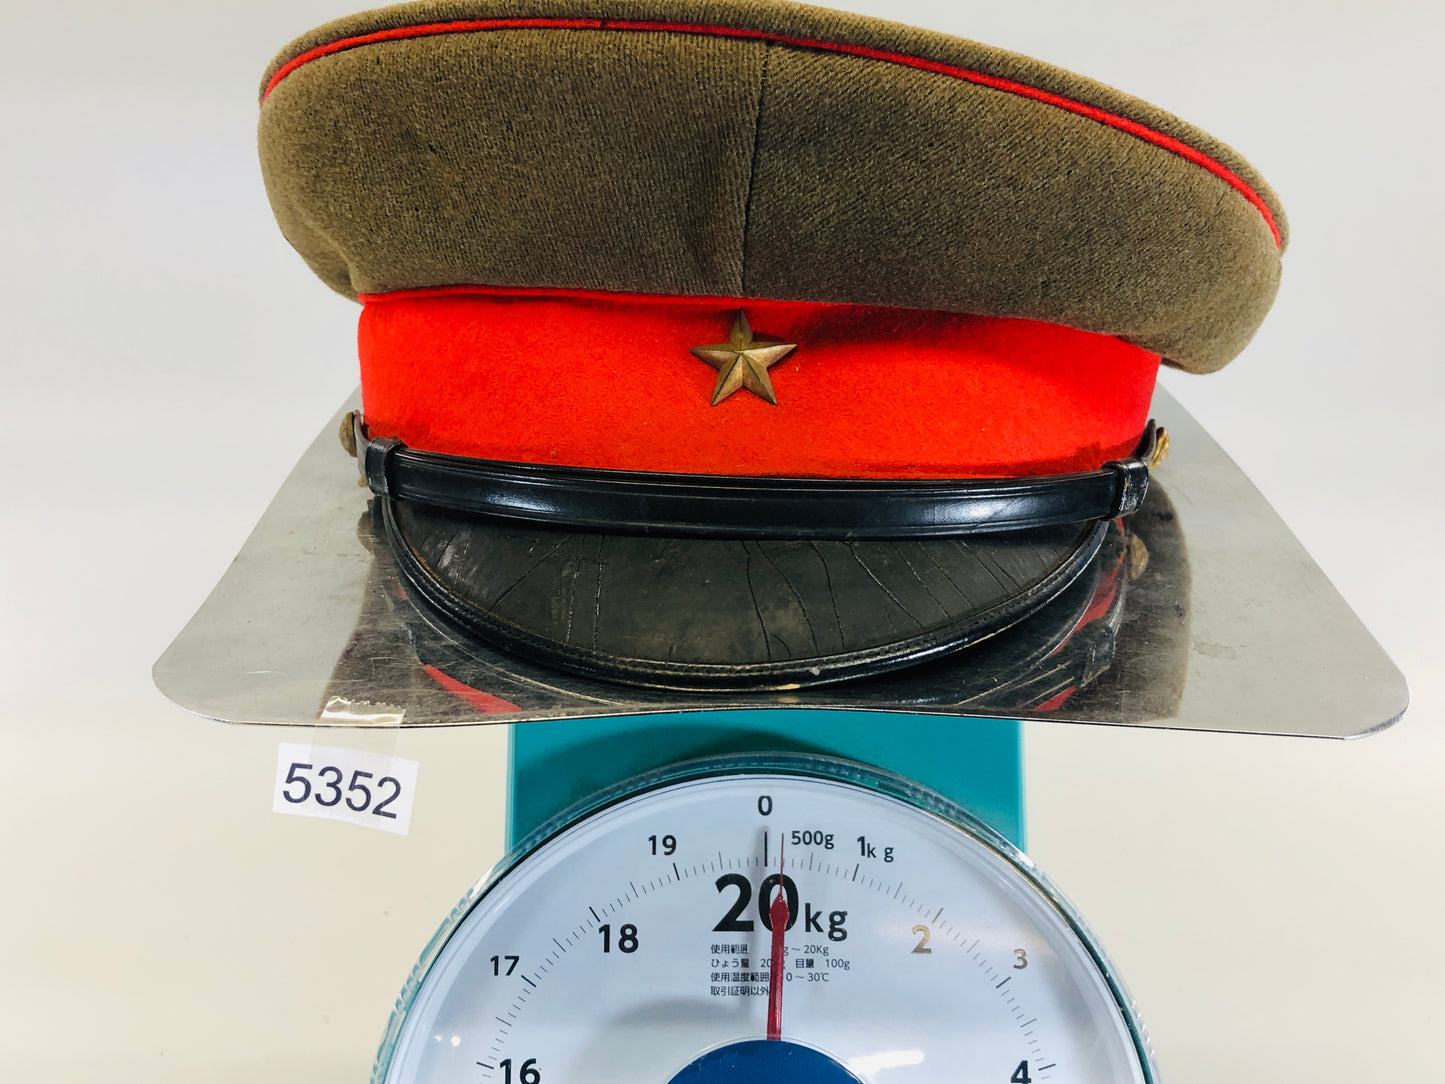 Y5352 Imperial Japan Army Military Hat cap star mark uniform Japan WW2 vintage